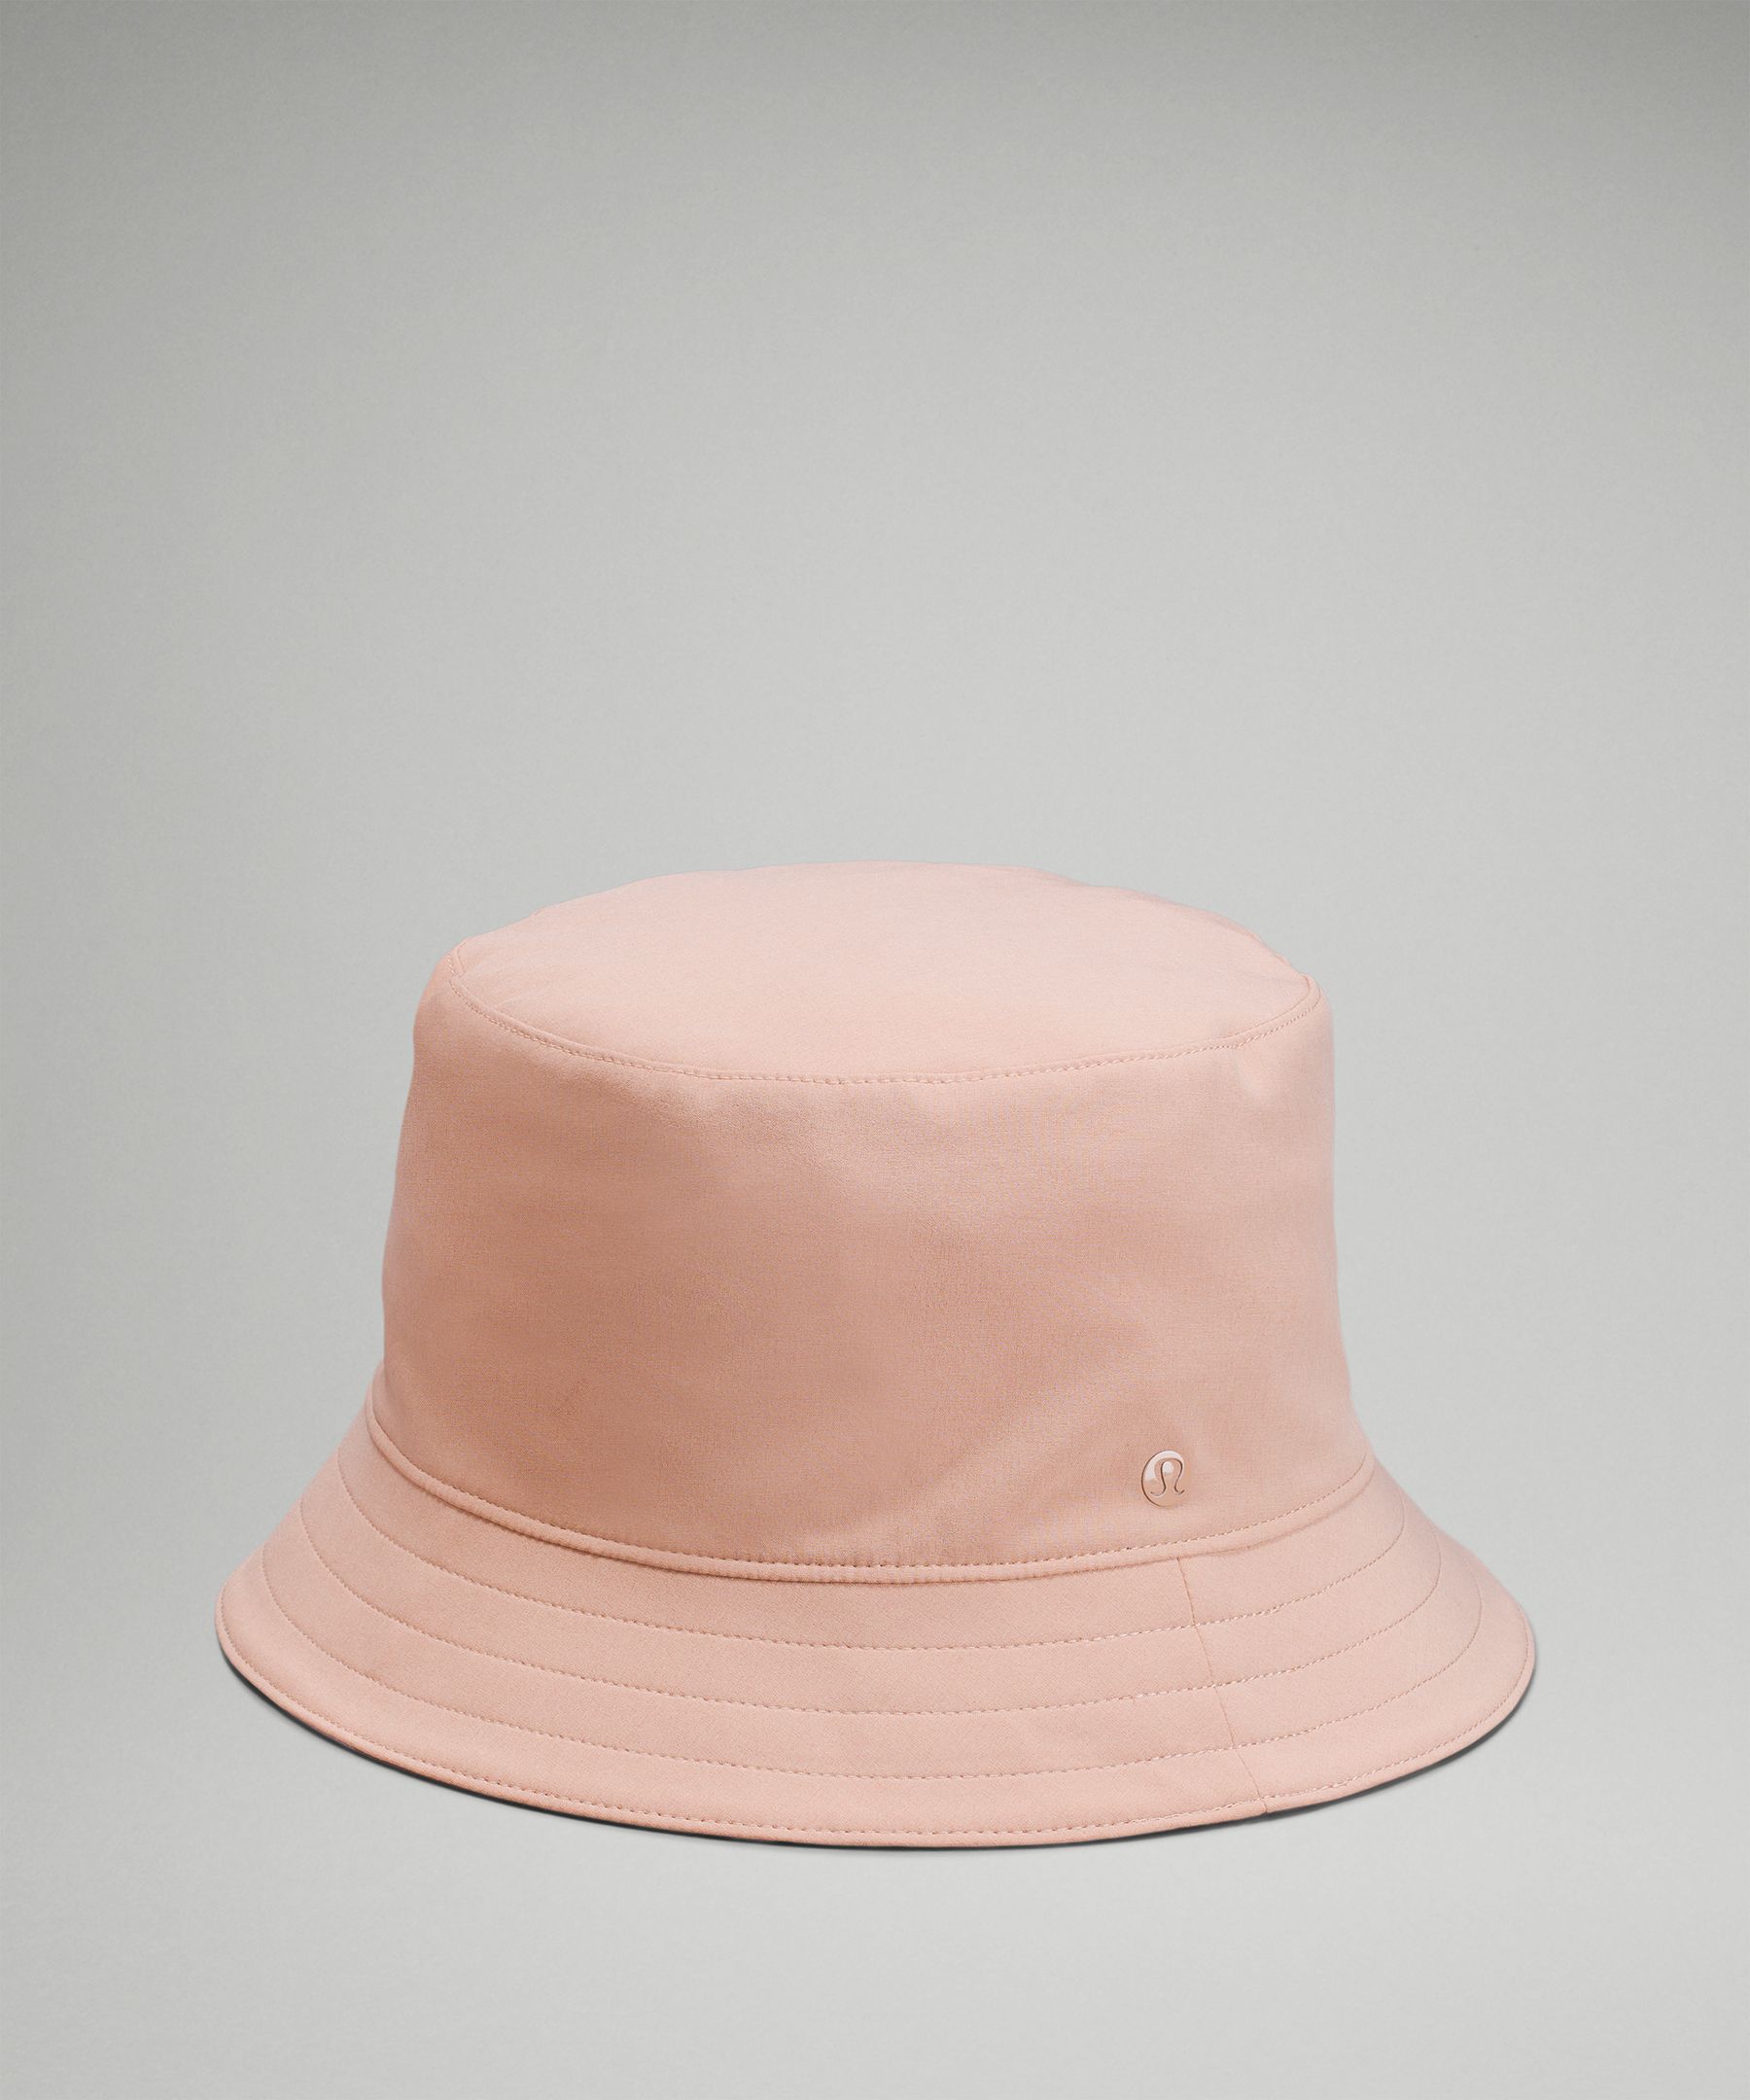 Lululemon Both Ways Reversible Bucket Hat In Pink Clay/heritage 365 Camo Misty Mauve